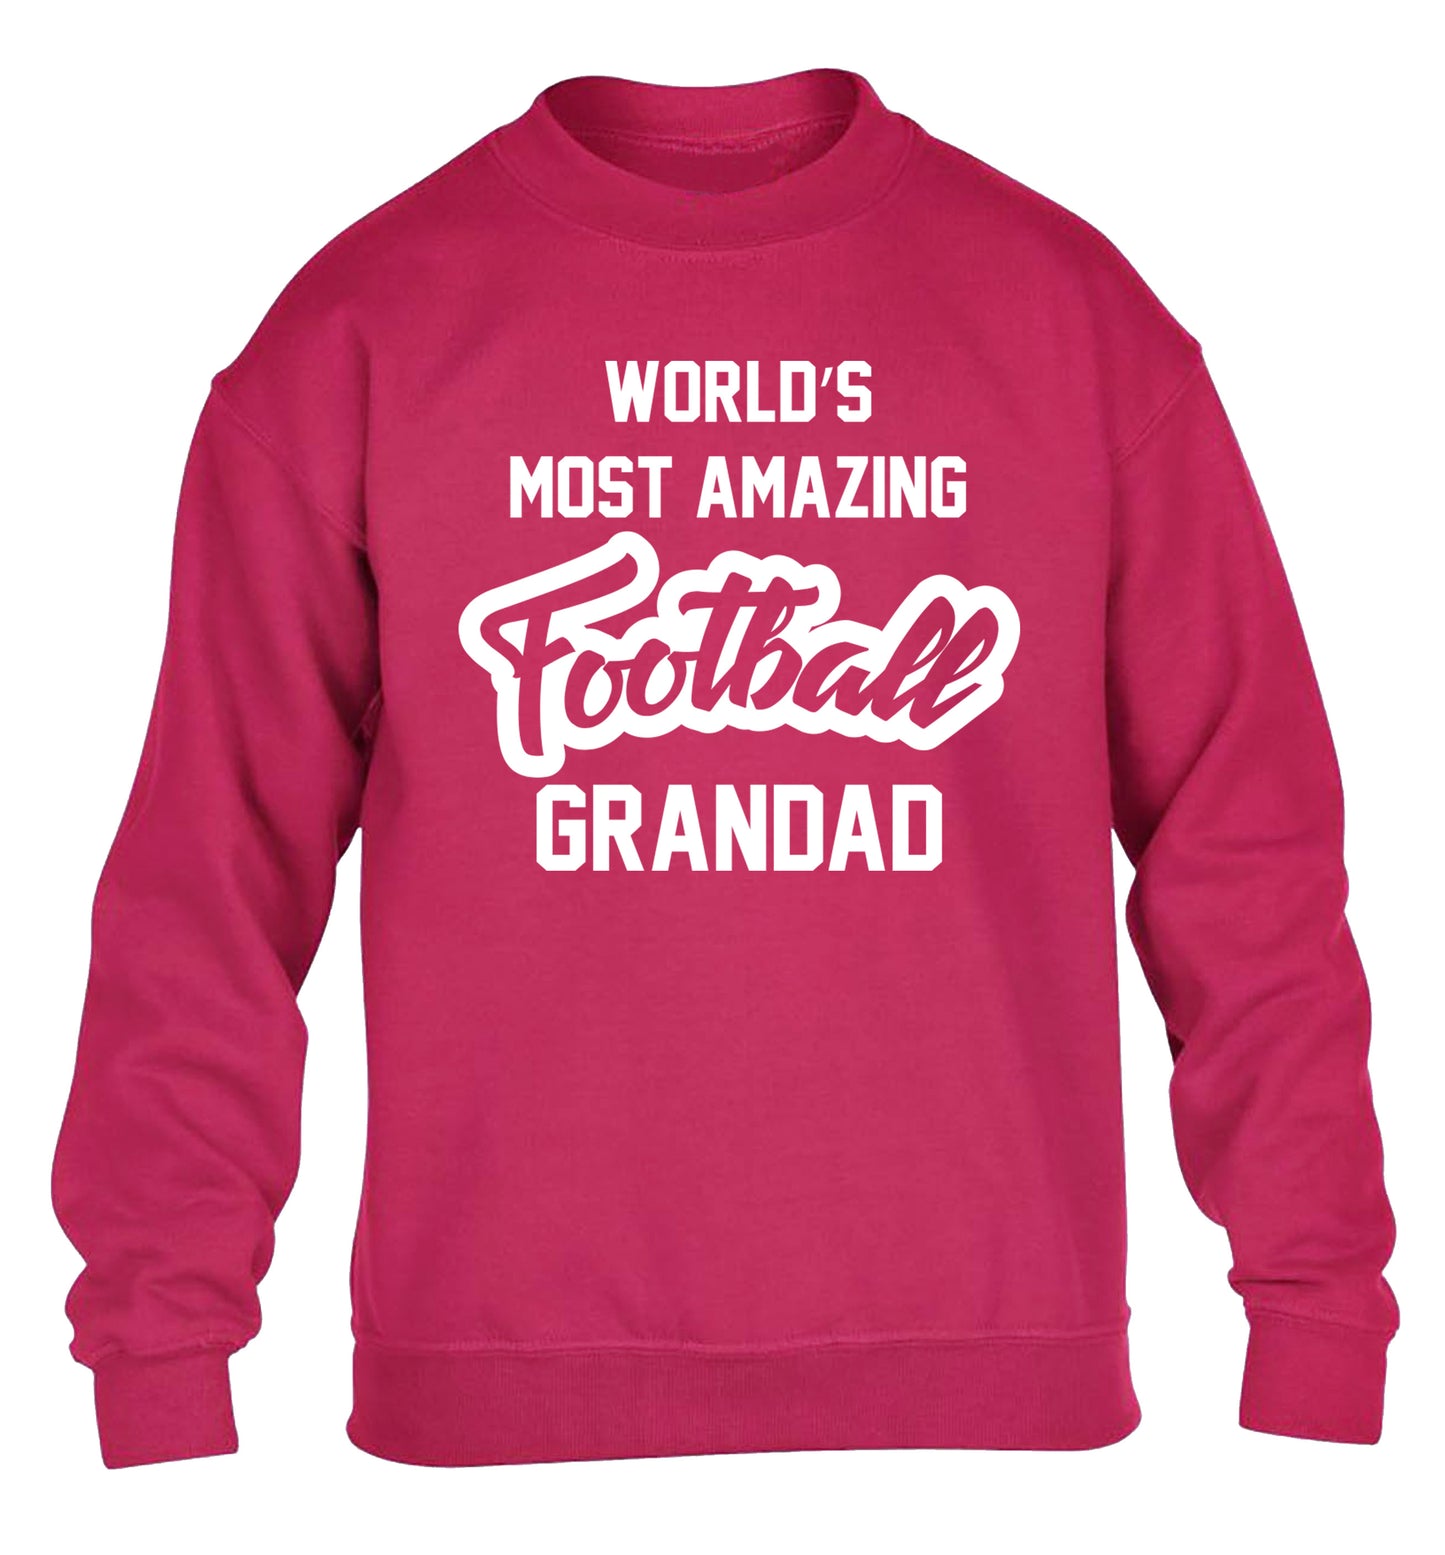 Worlds most amazing football grandad children's pink sweater 12-14 Years